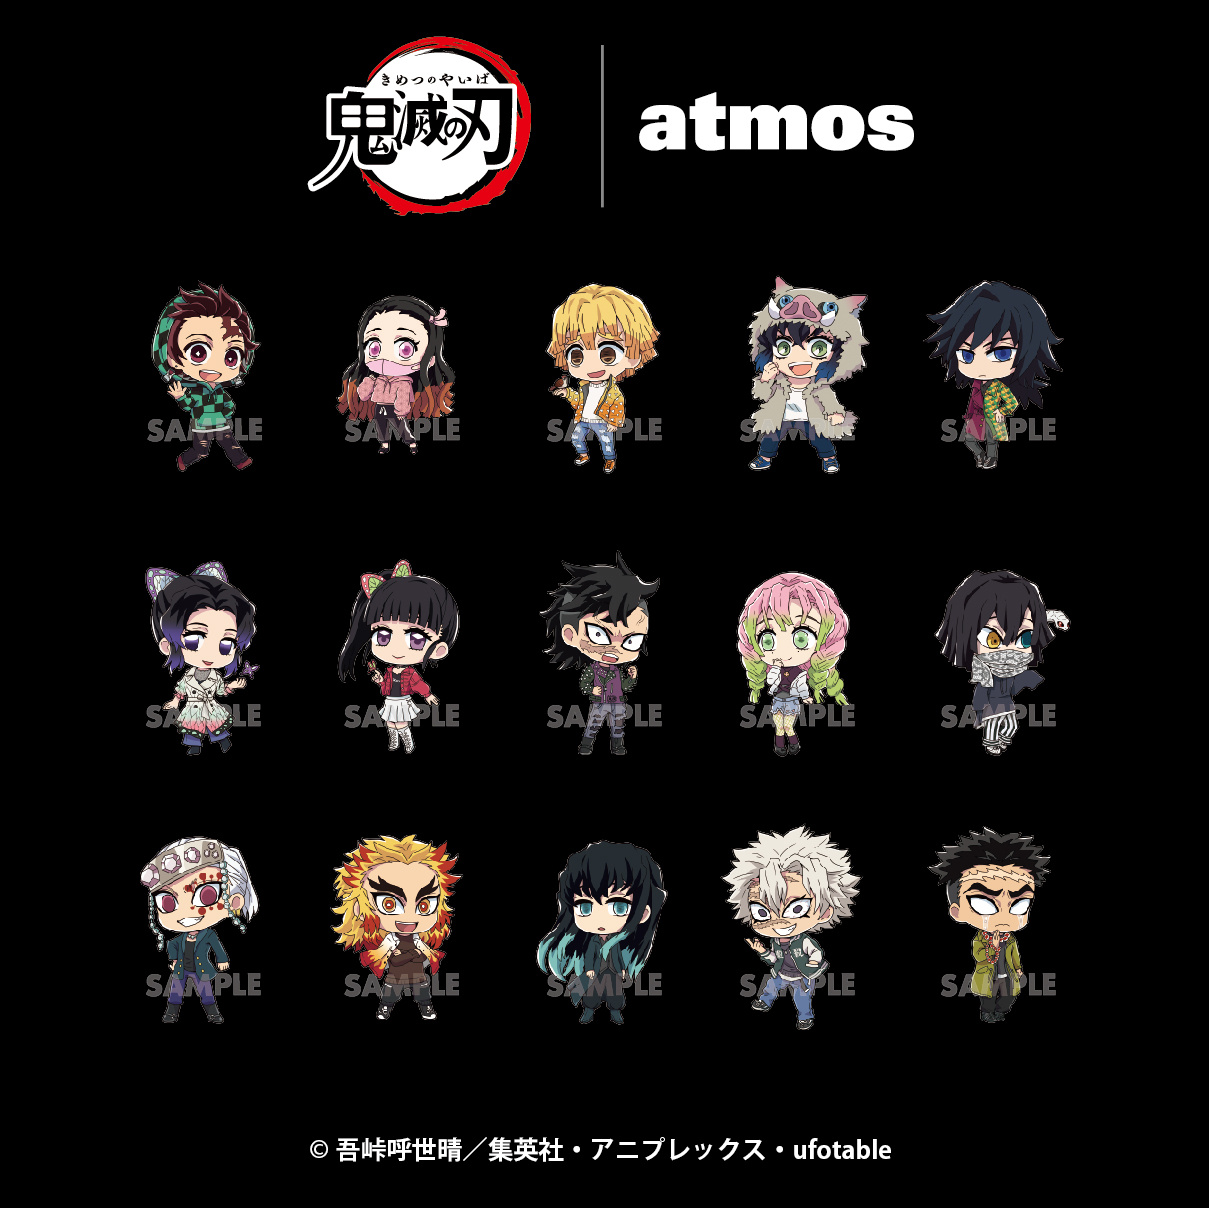 Tvアニメ 鬼滅の刃 オリジナルアイテム第3弾 Atmosがデザインしたストリートファッションを纏ったキャラクター グッズが登場 株式会社テクストトレーディングカンパニーのプレスリリース